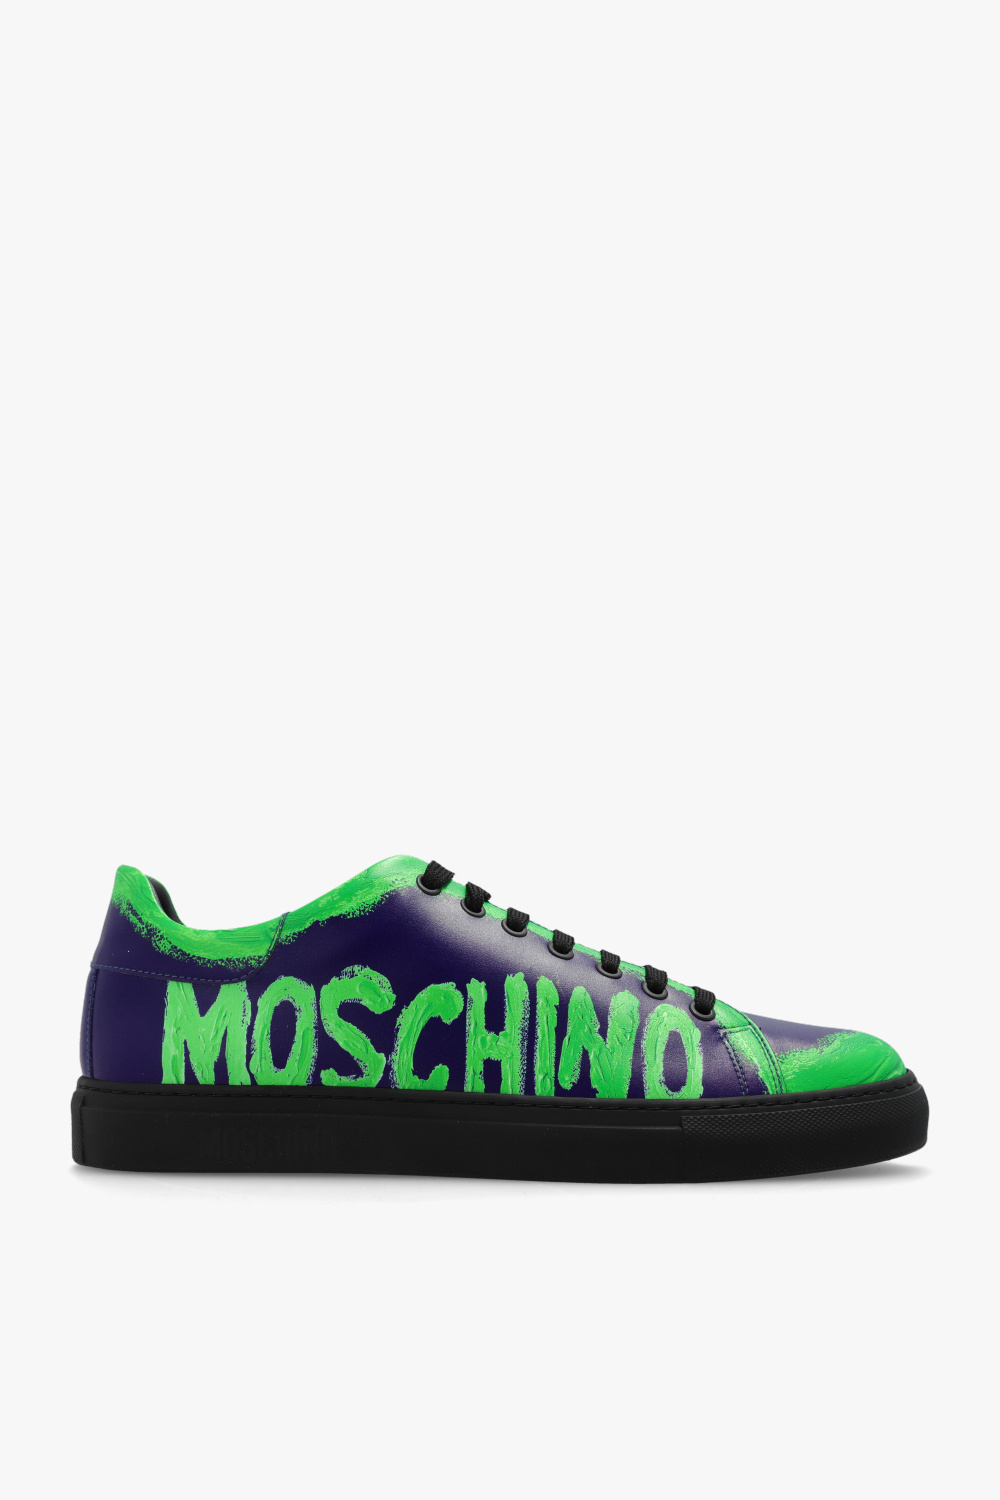 White Sneakers with logo Moschino - Vitkac Canada